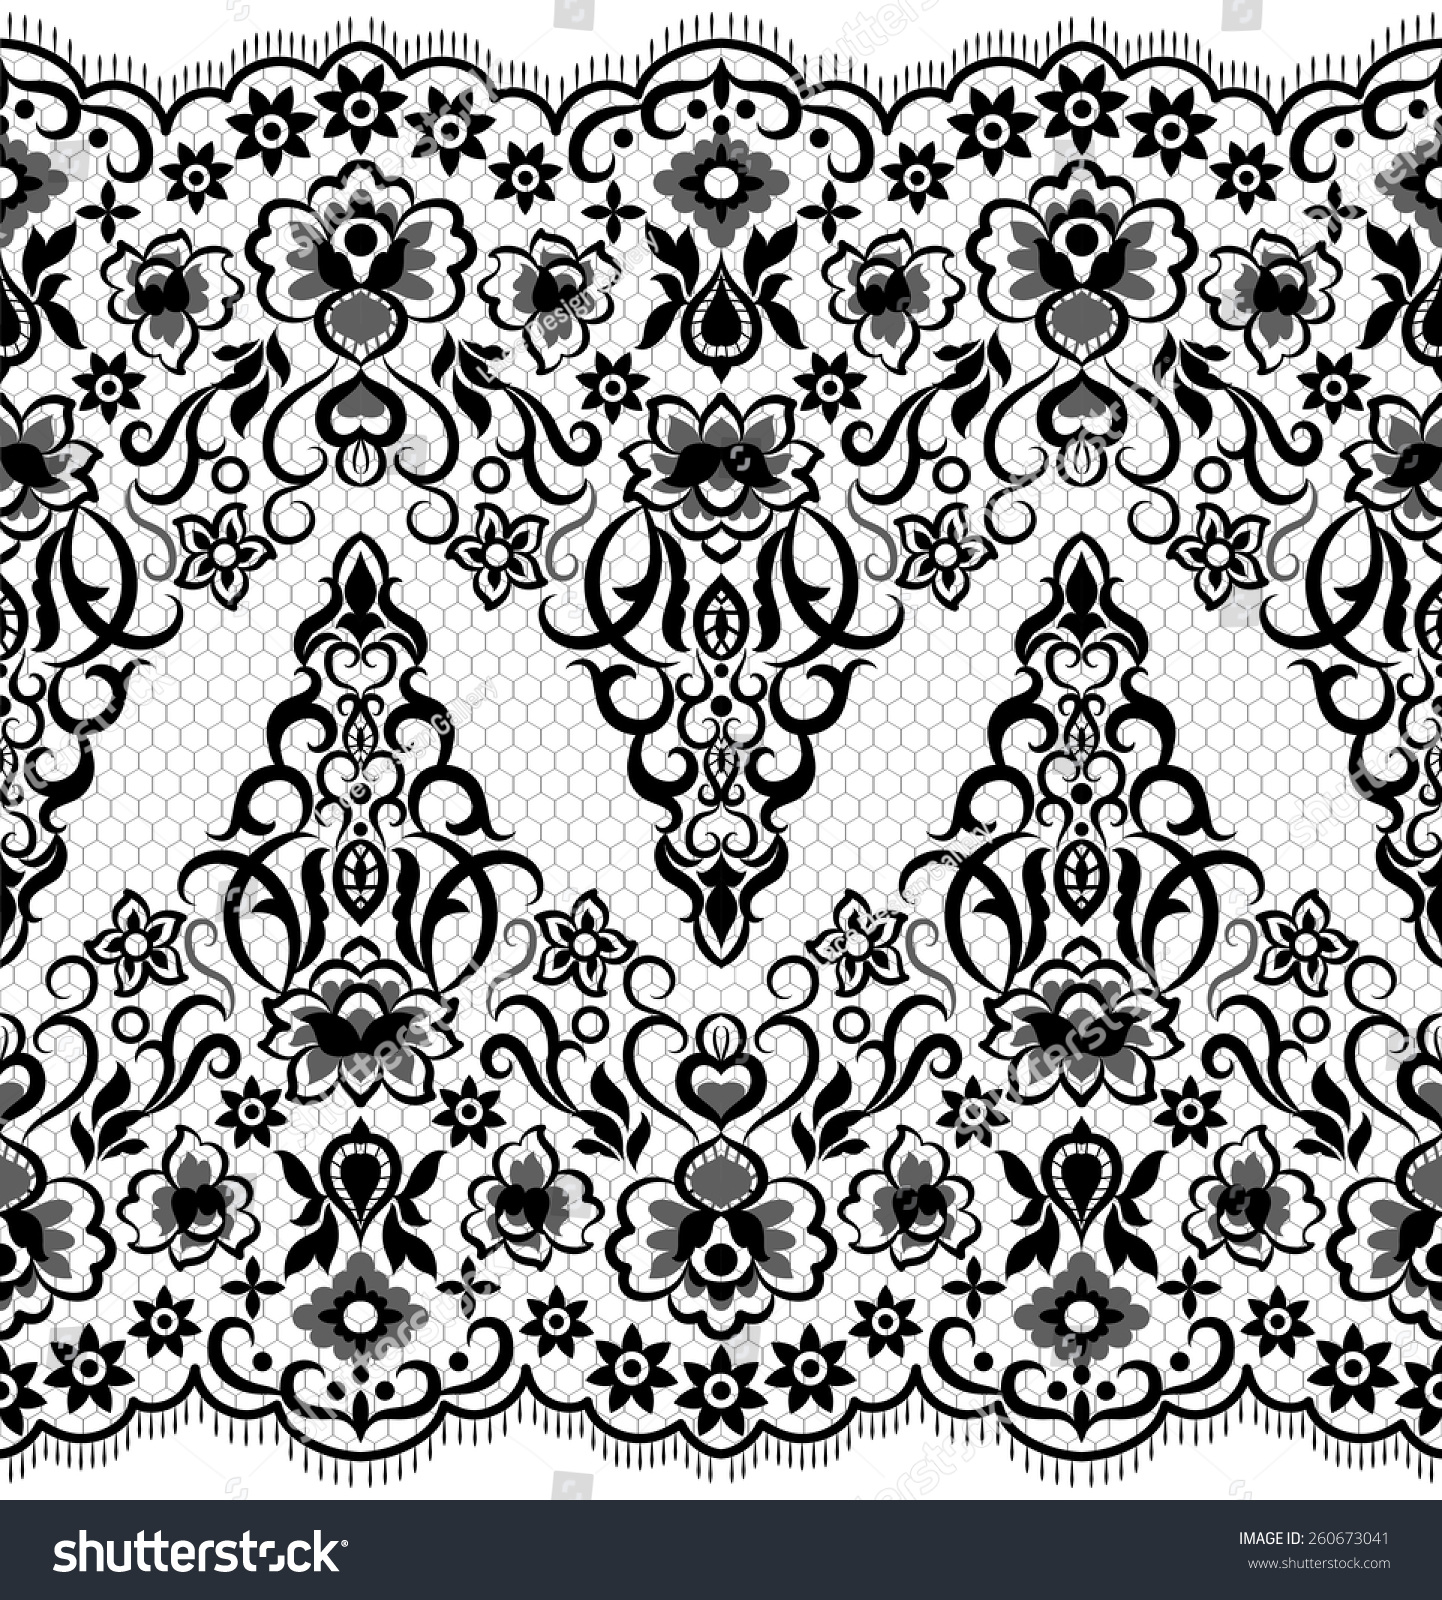 Vector Seamless Pattern. Textile Design - 260673041 : Shutterstock